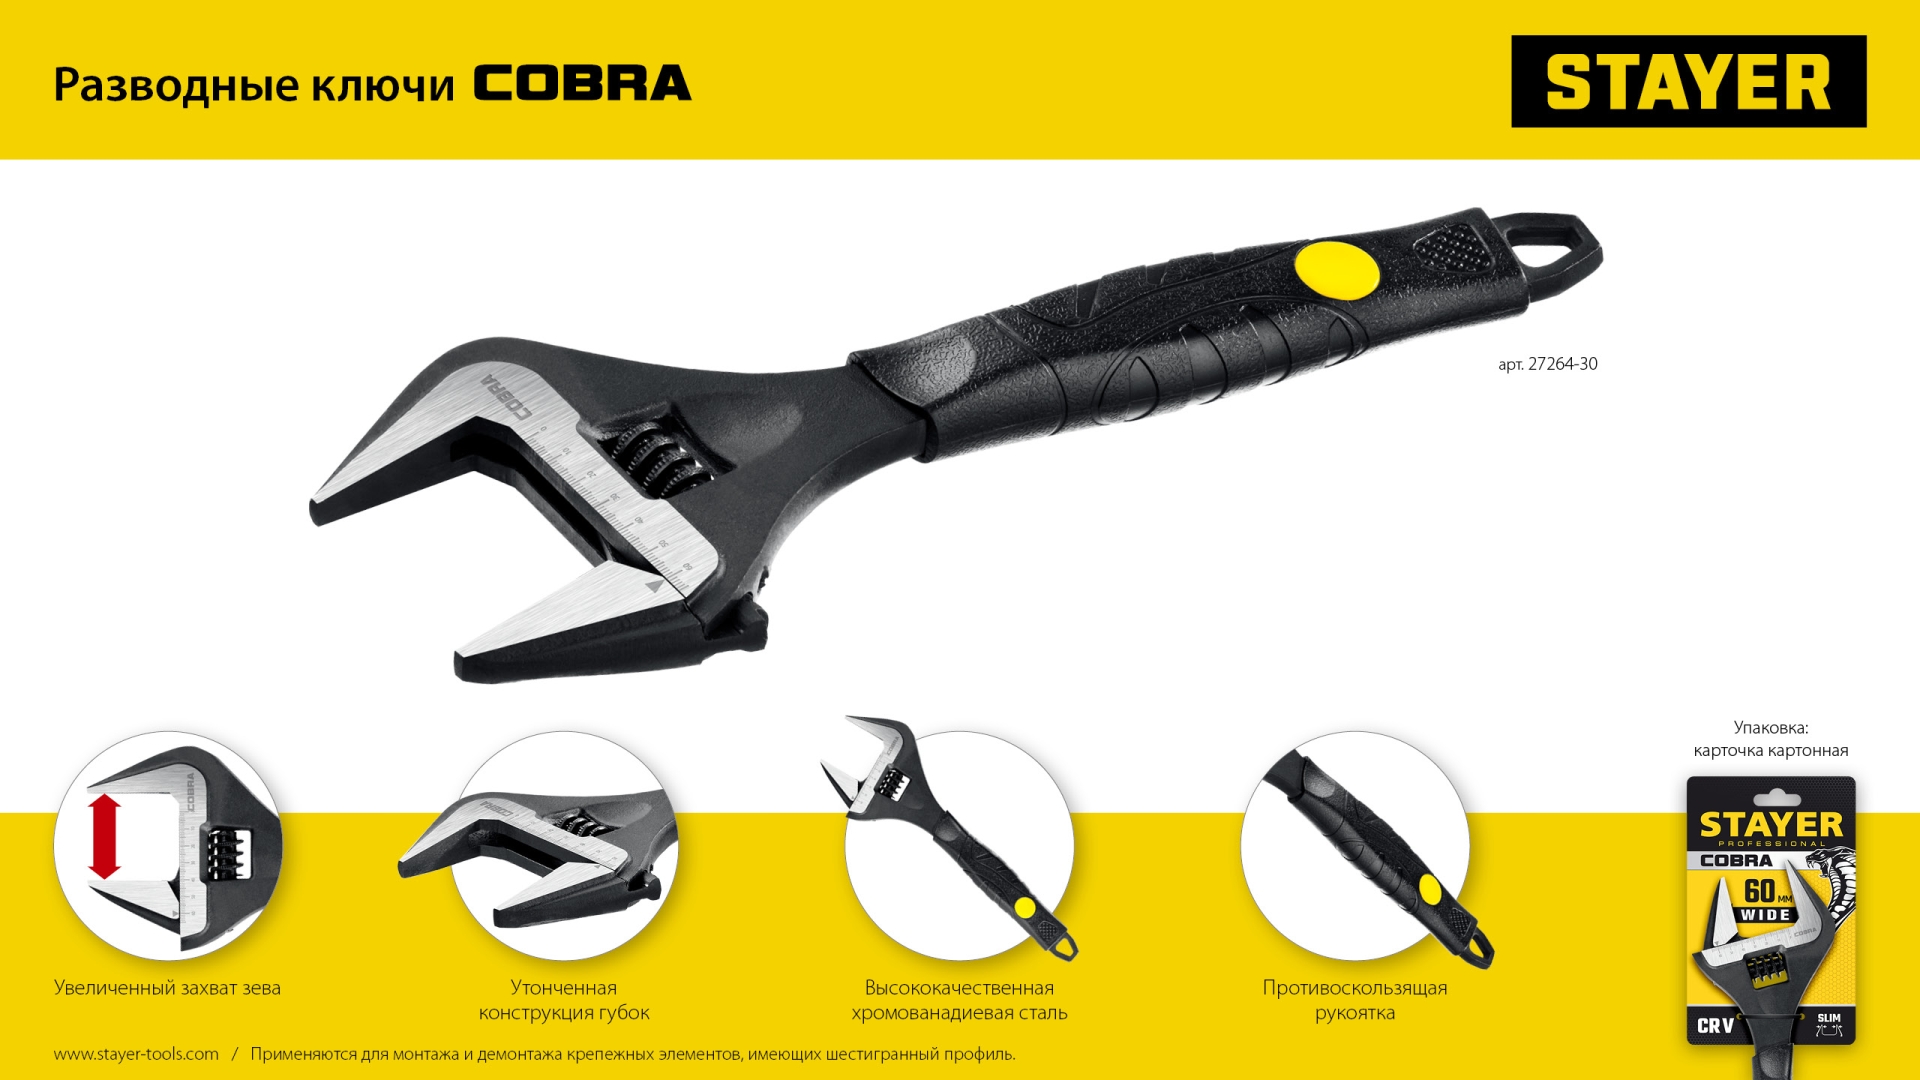 STAYER Cobra, 300/60 мм, разводной ключ, Professional (27264-30)